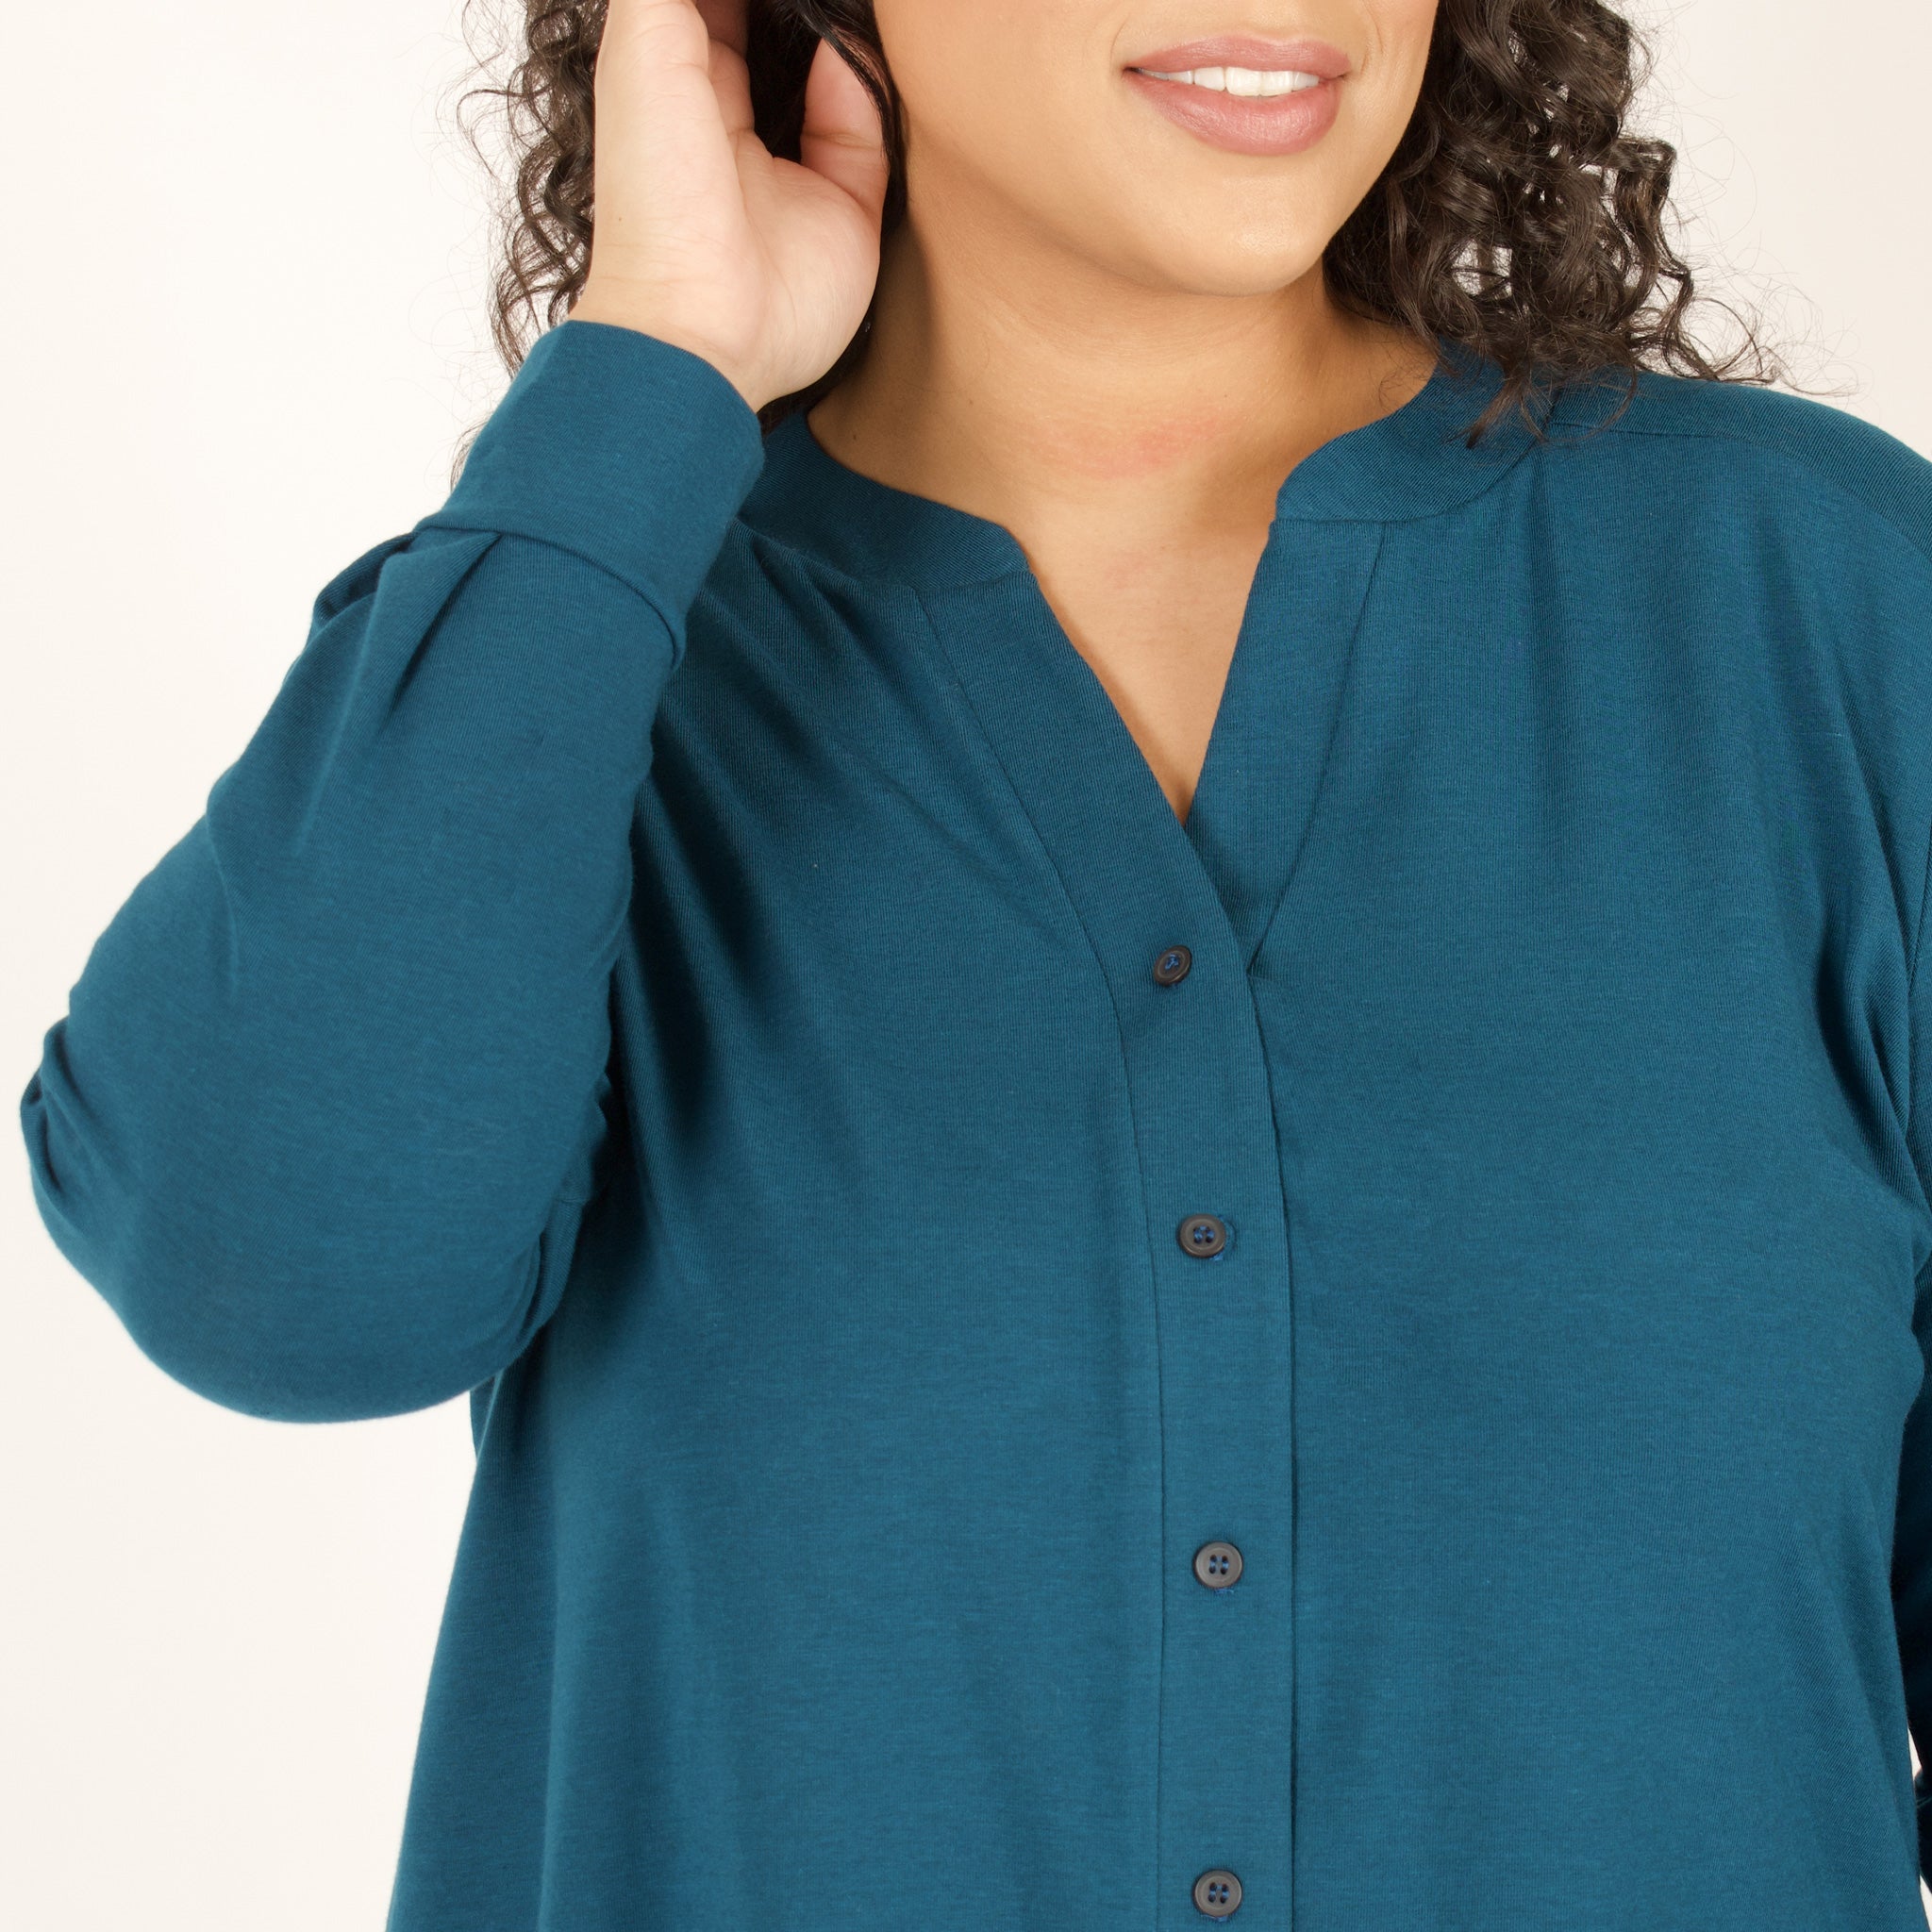 Woman wearing bright blue long sleeve button up shirt